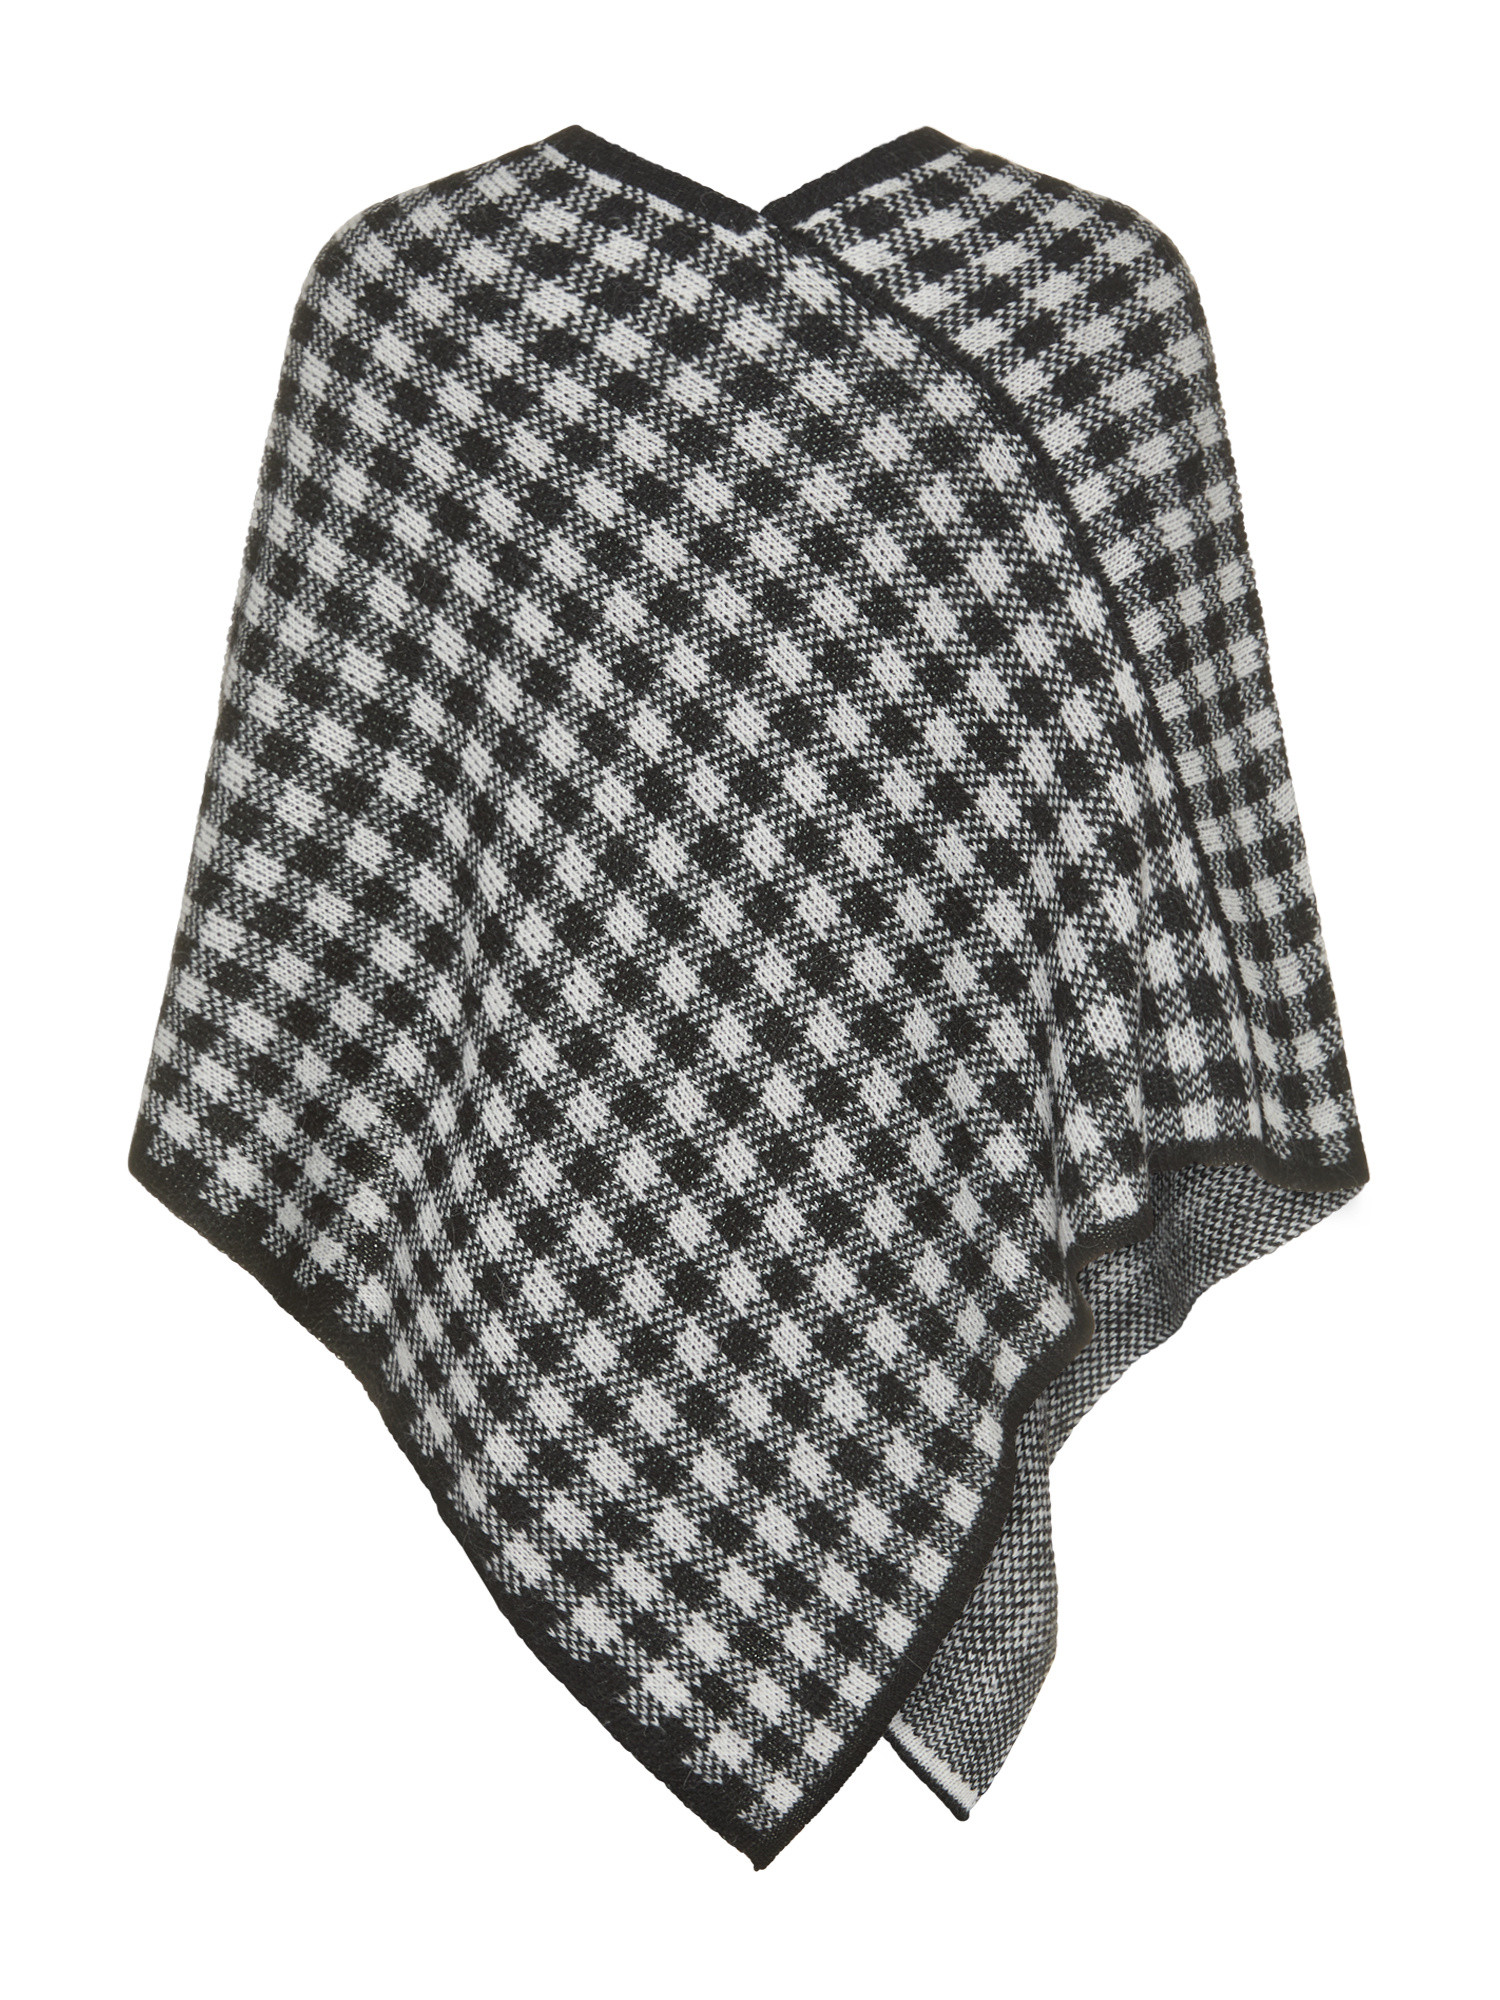 Koan - Checked jacquard knit poncho, White, large image number 1